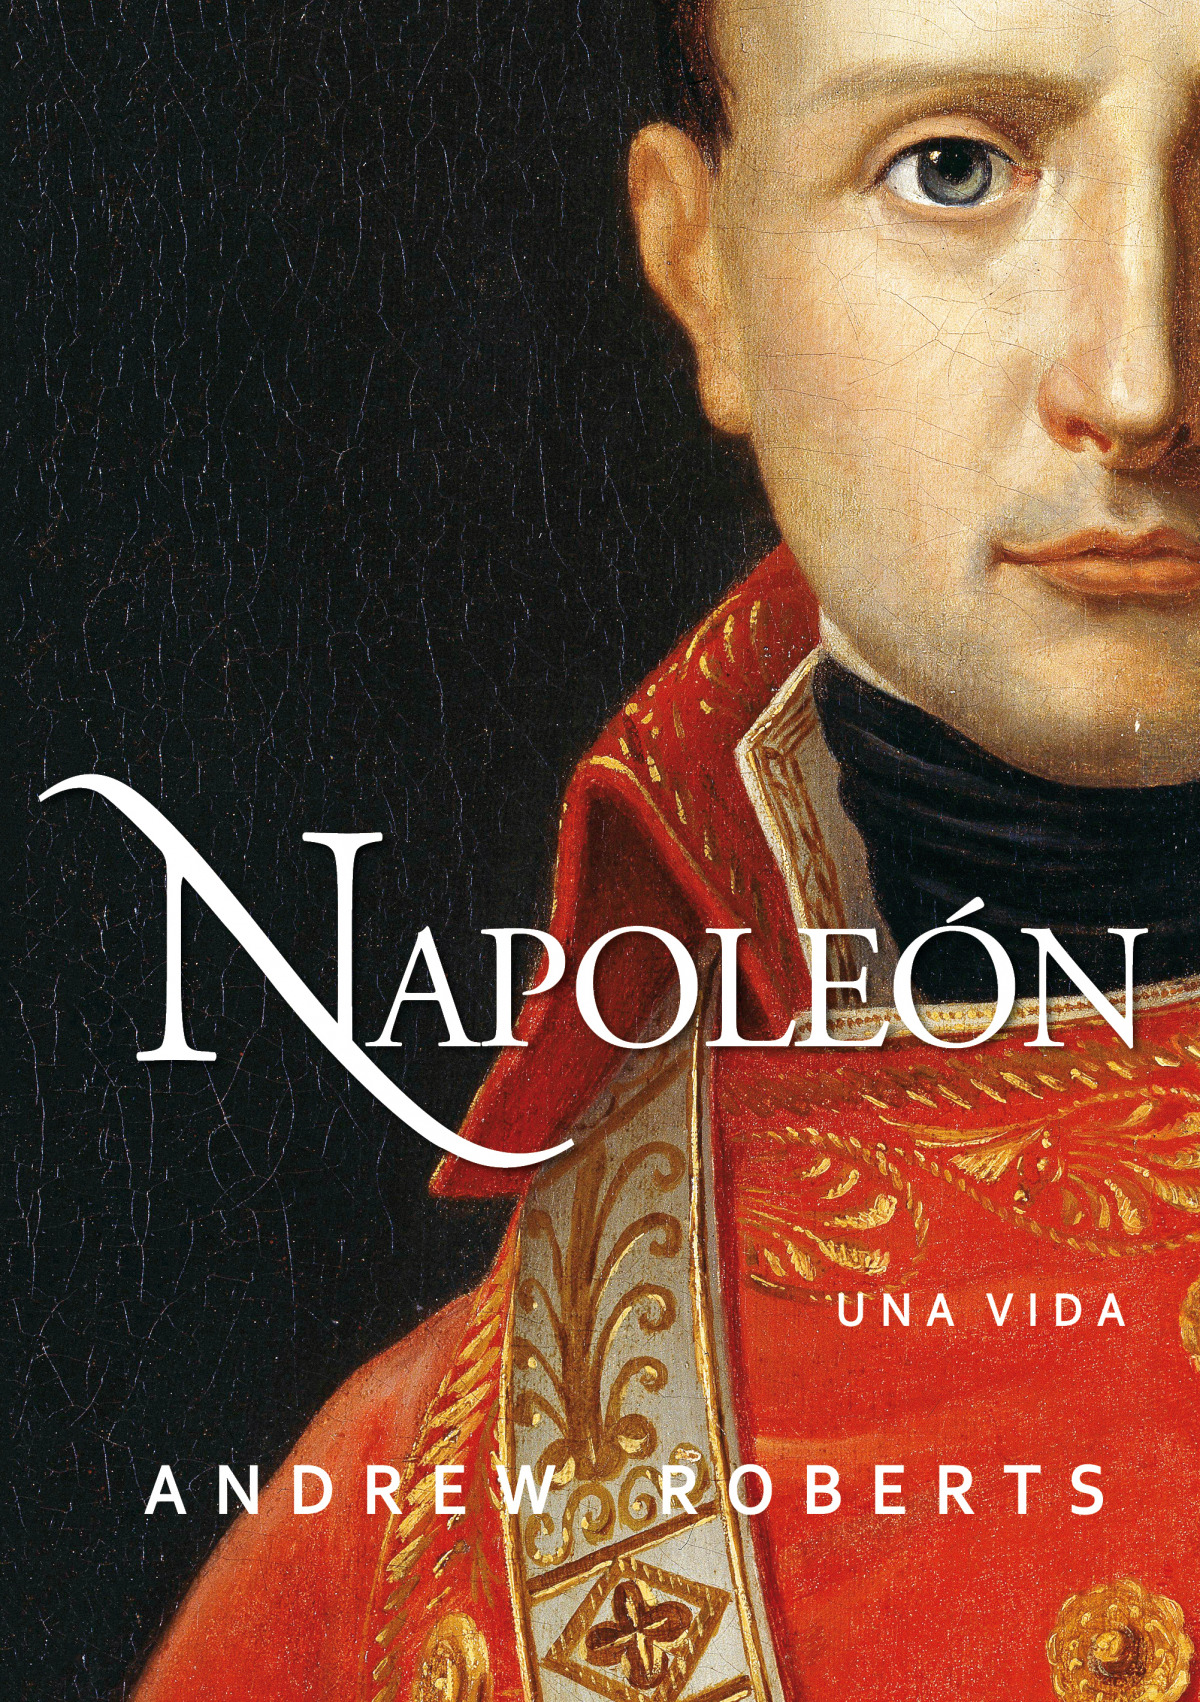 Napoleón Una vida - Roberts, Andrew